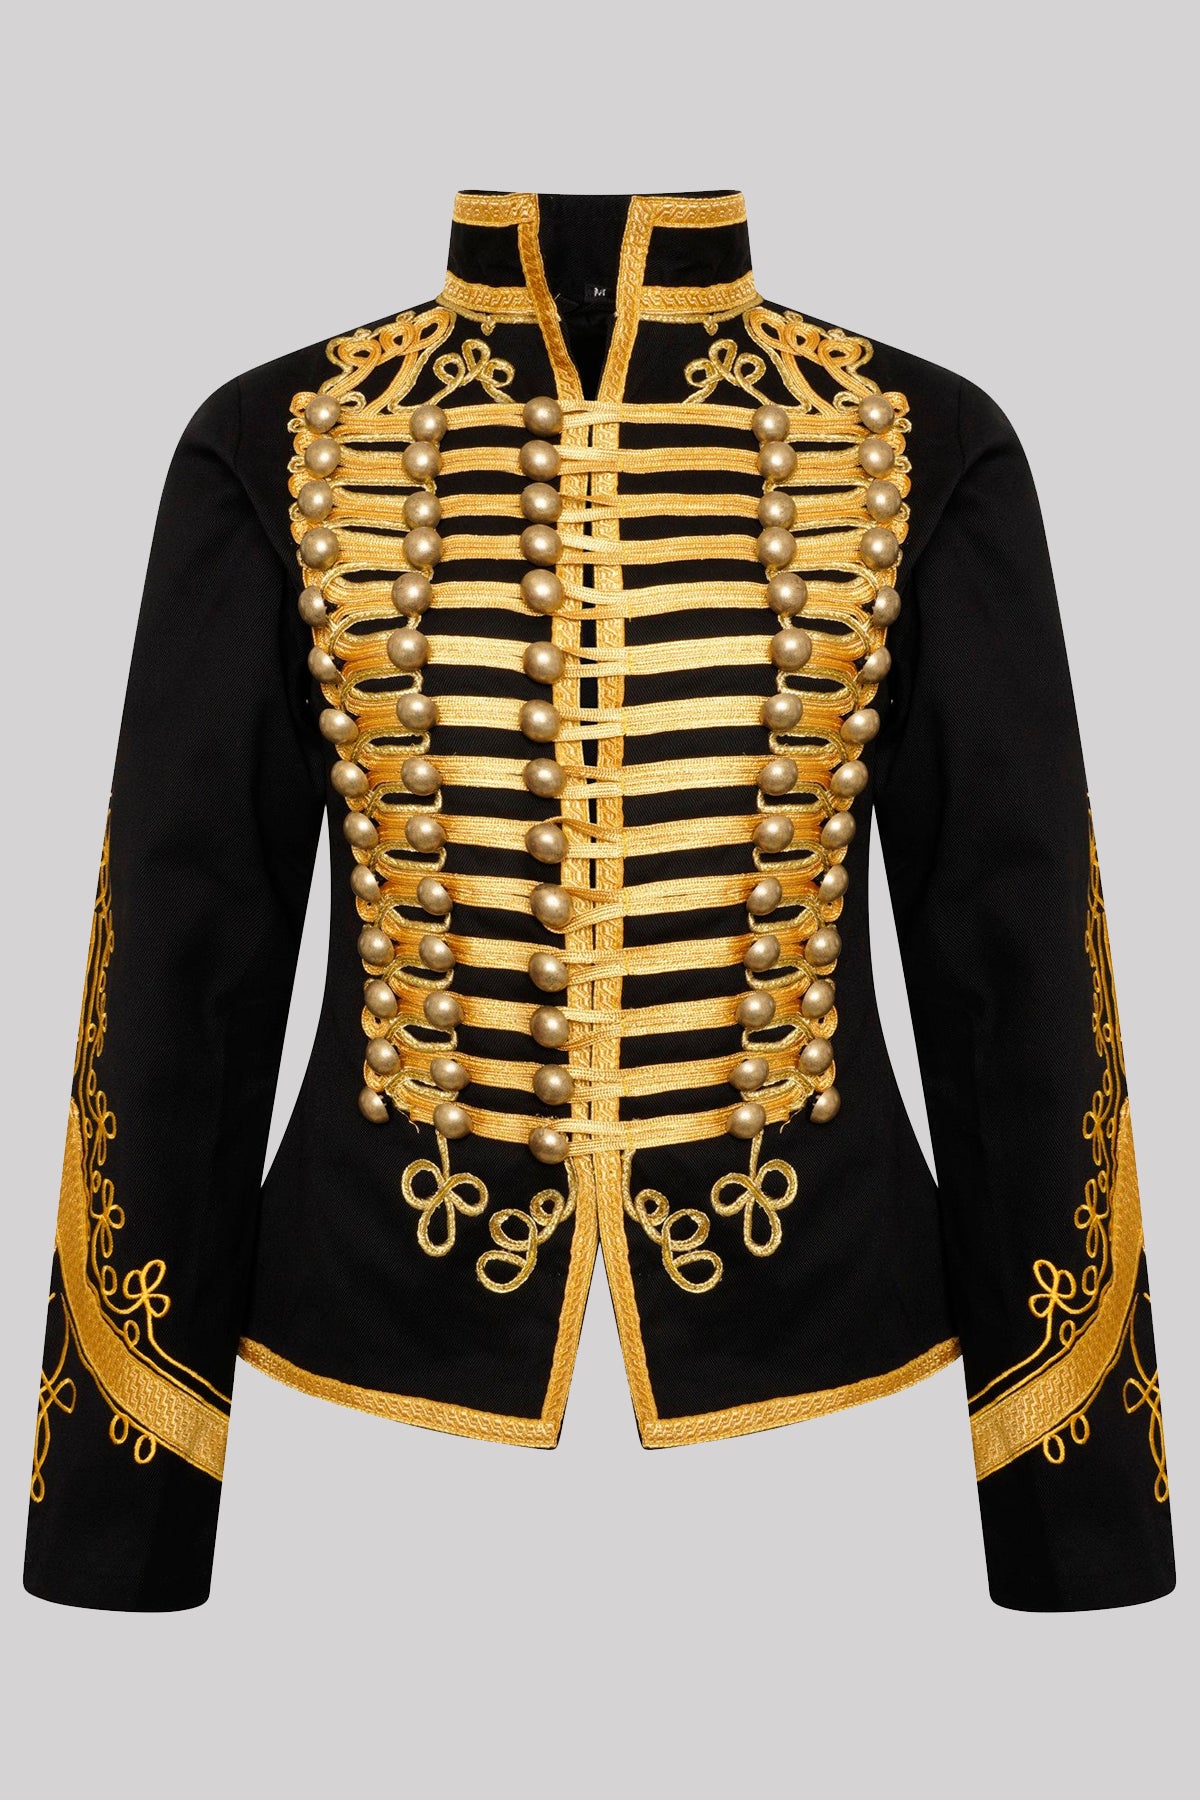 Ro Rox Women's Adam Luxe Military Drummer Black Parade Jacket